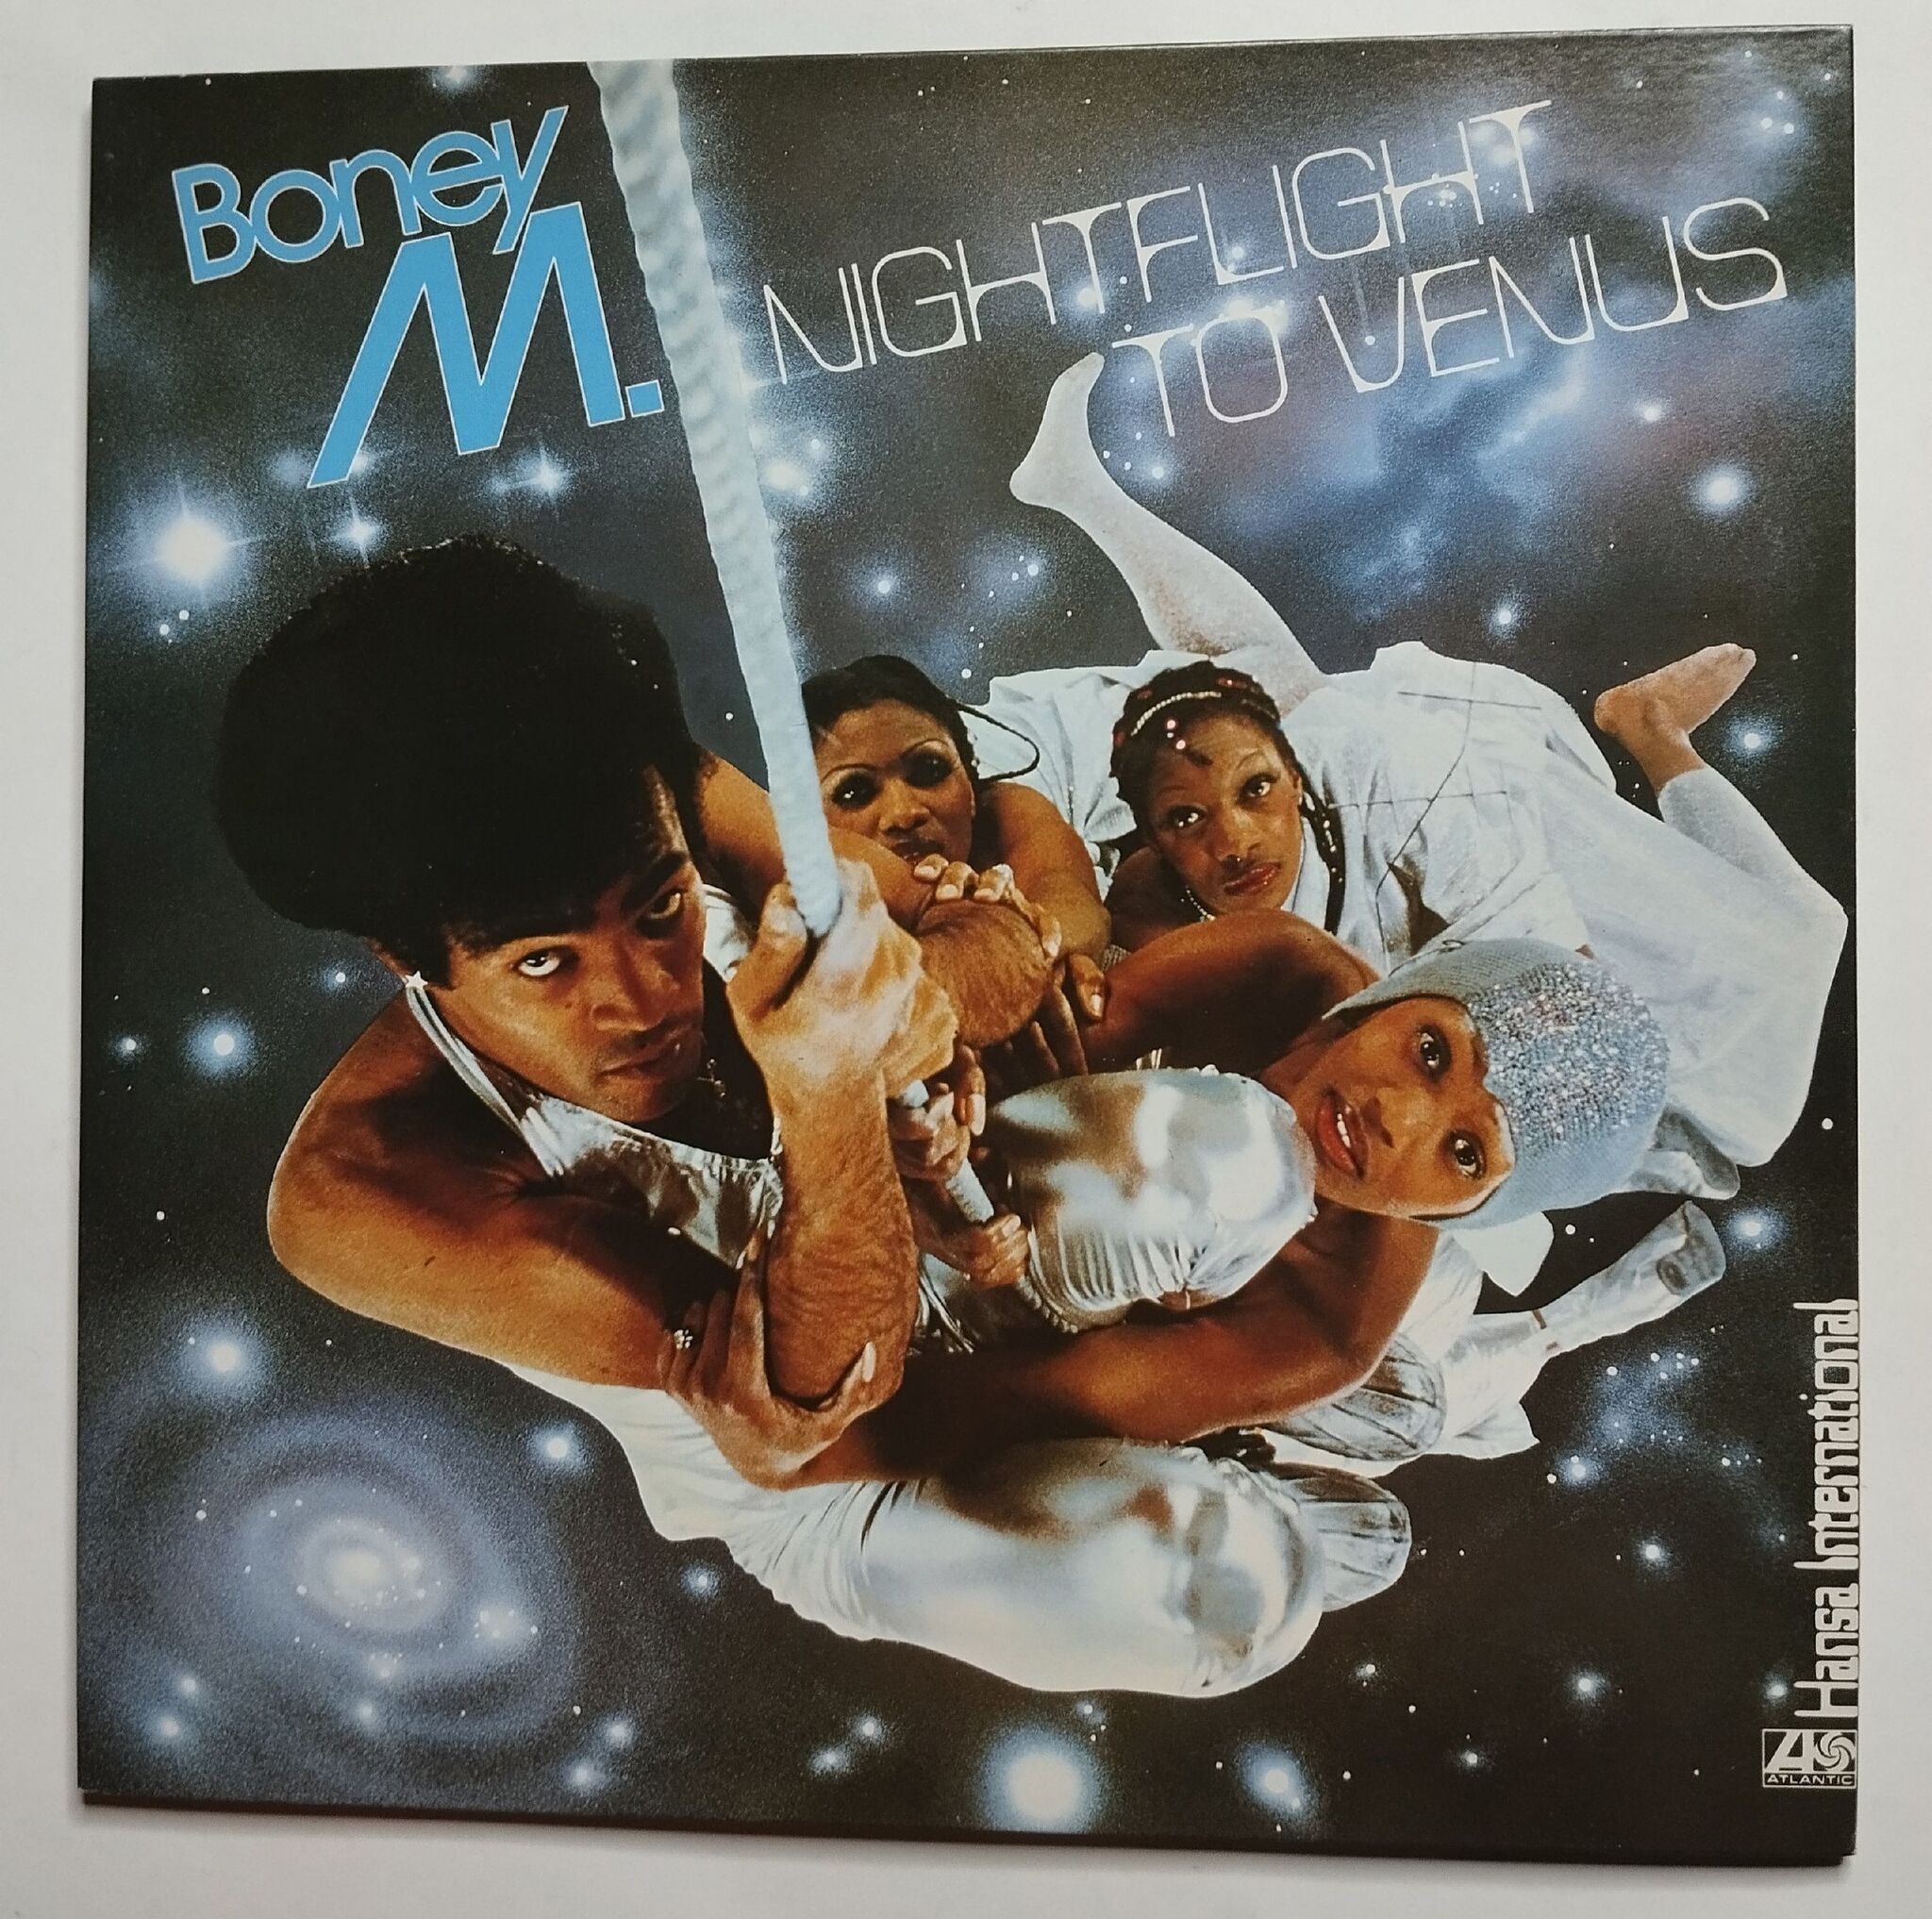 Boney m nightflight. Группа Boney m. 1978. 1978 - Nightflight to Venus. Boney m Nightflight to Venus 1978. Бони м 1978.